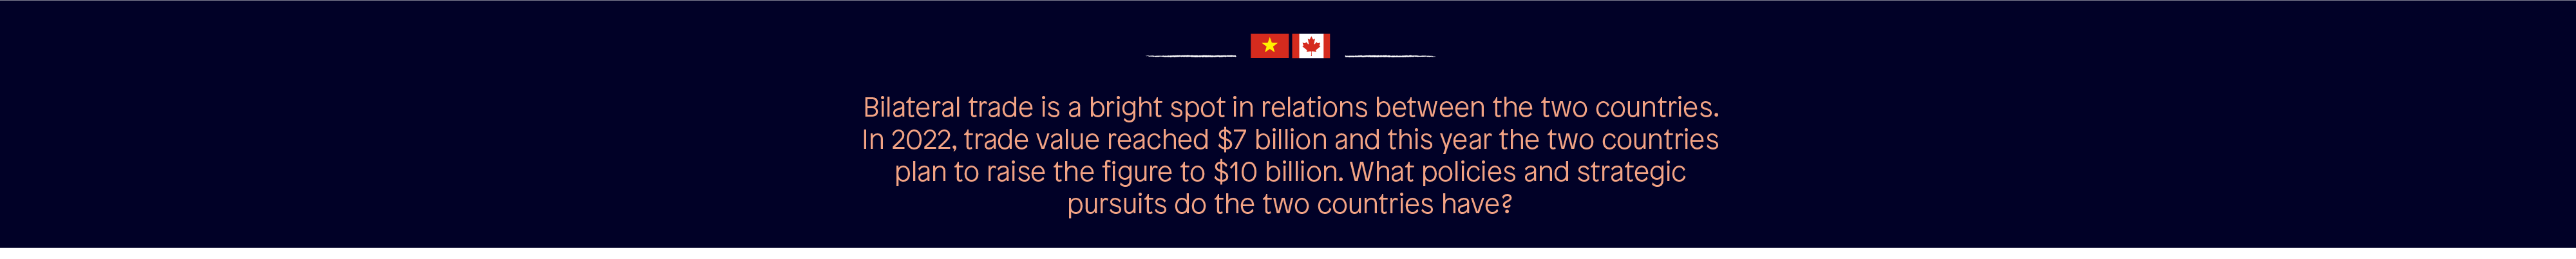 Vietnam & Canada enhancing engagement - Ảnh 5